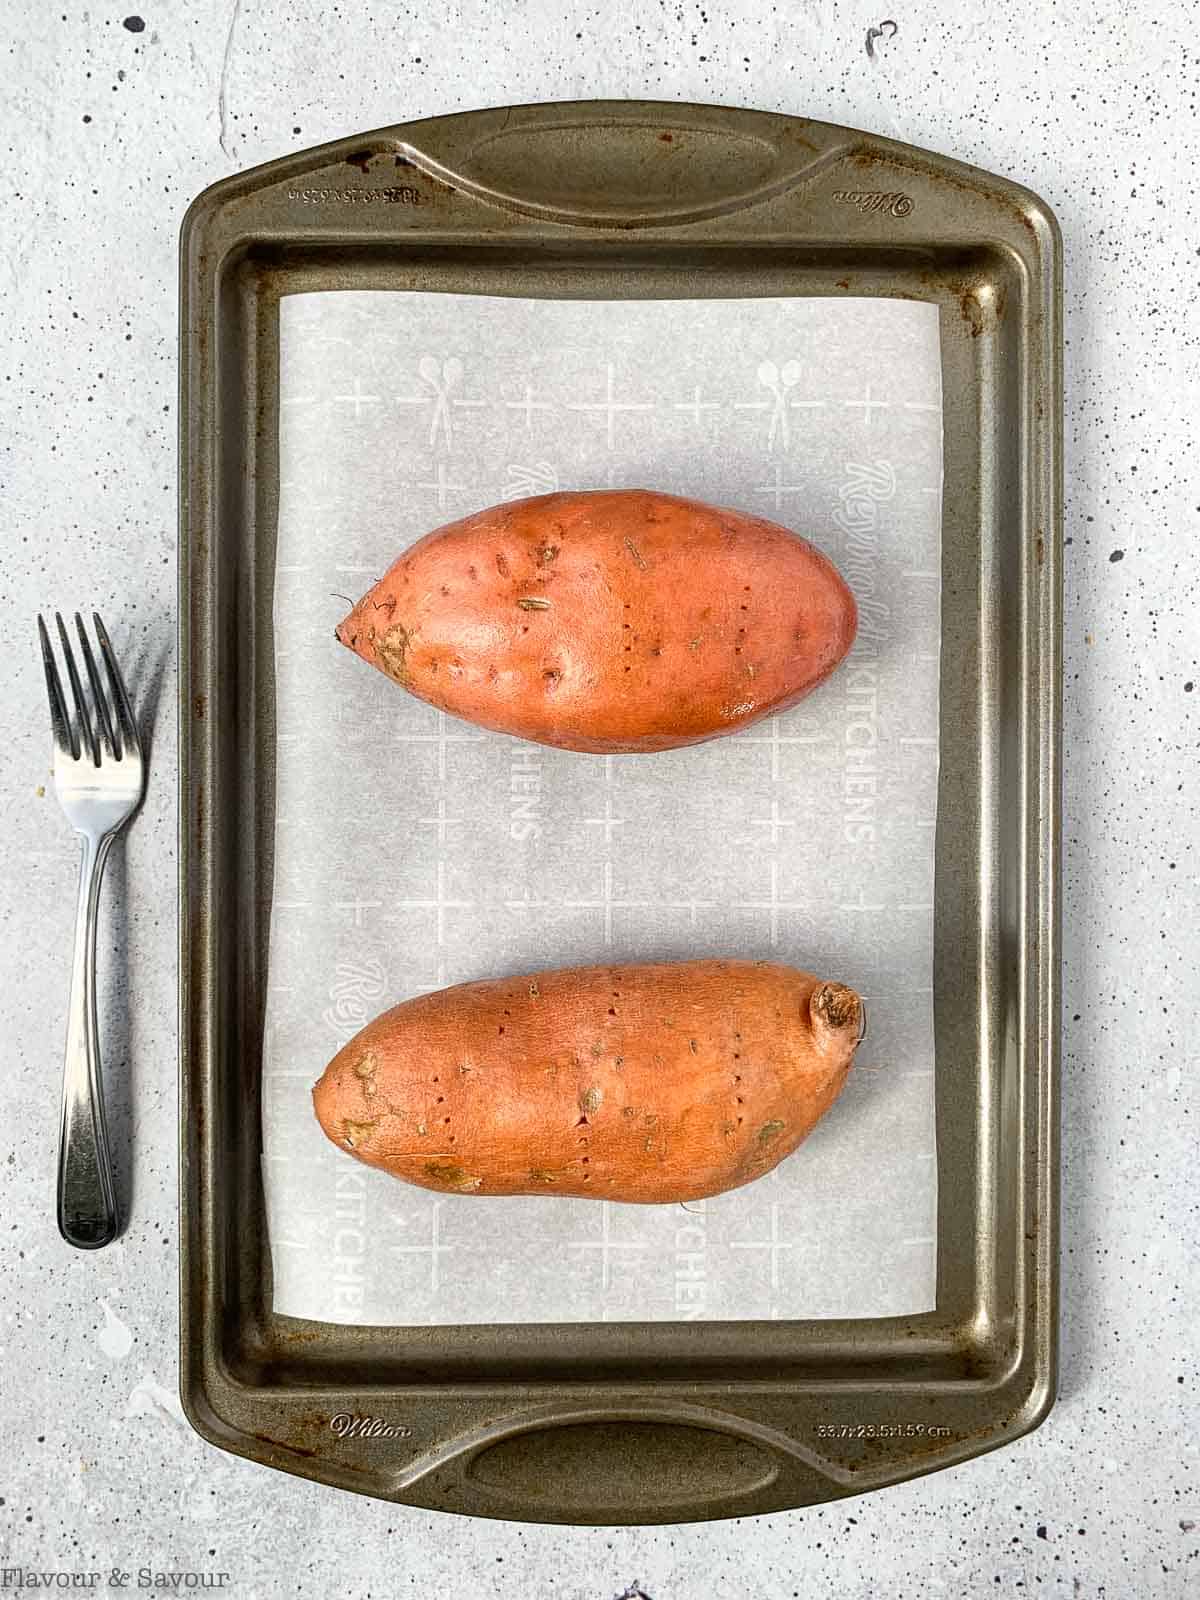 Two sweet potatoes on a baking sheet.